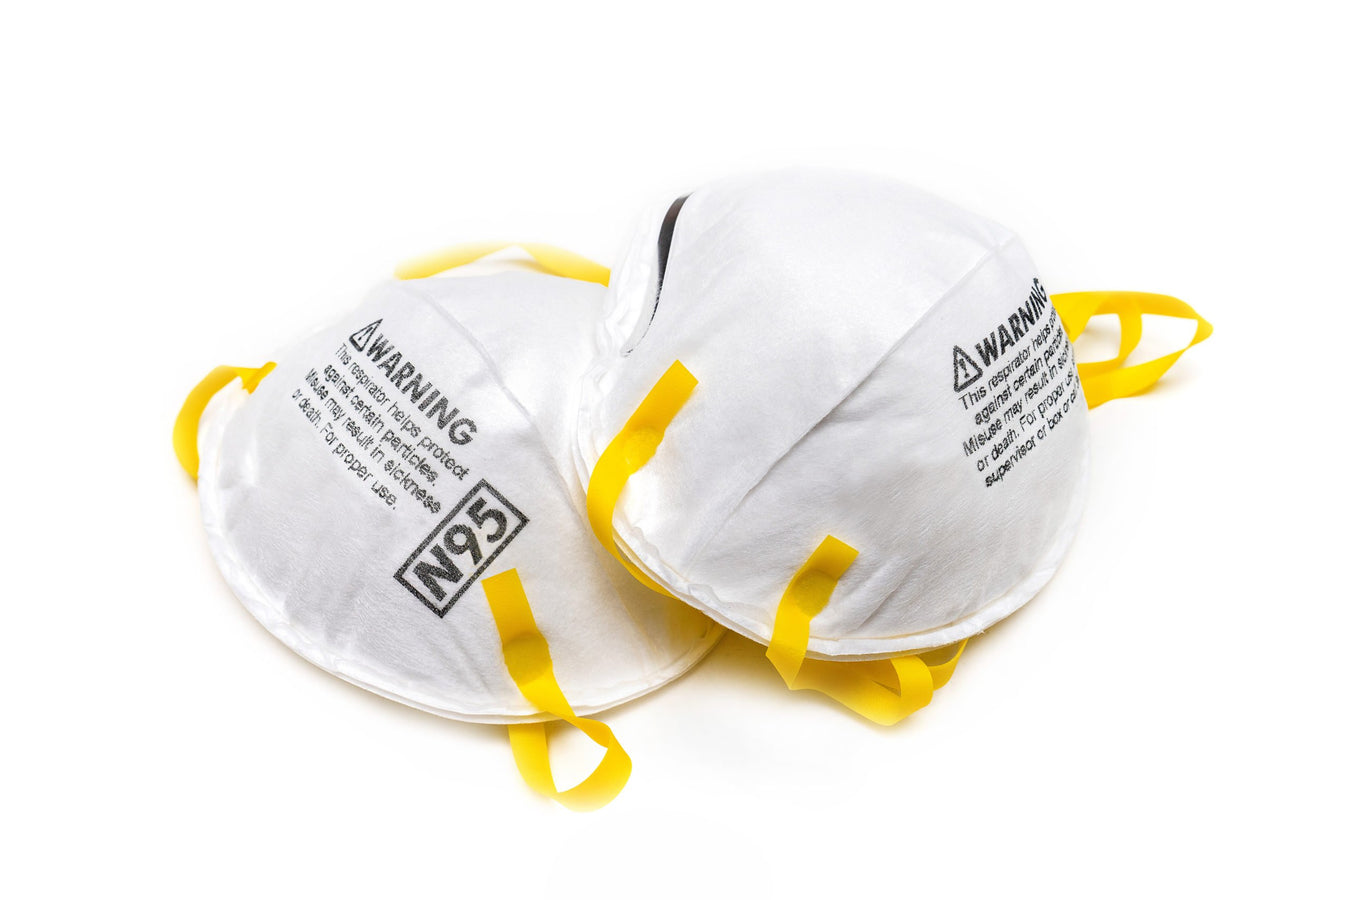 N95 Masks - Respirators and Surgical Masks